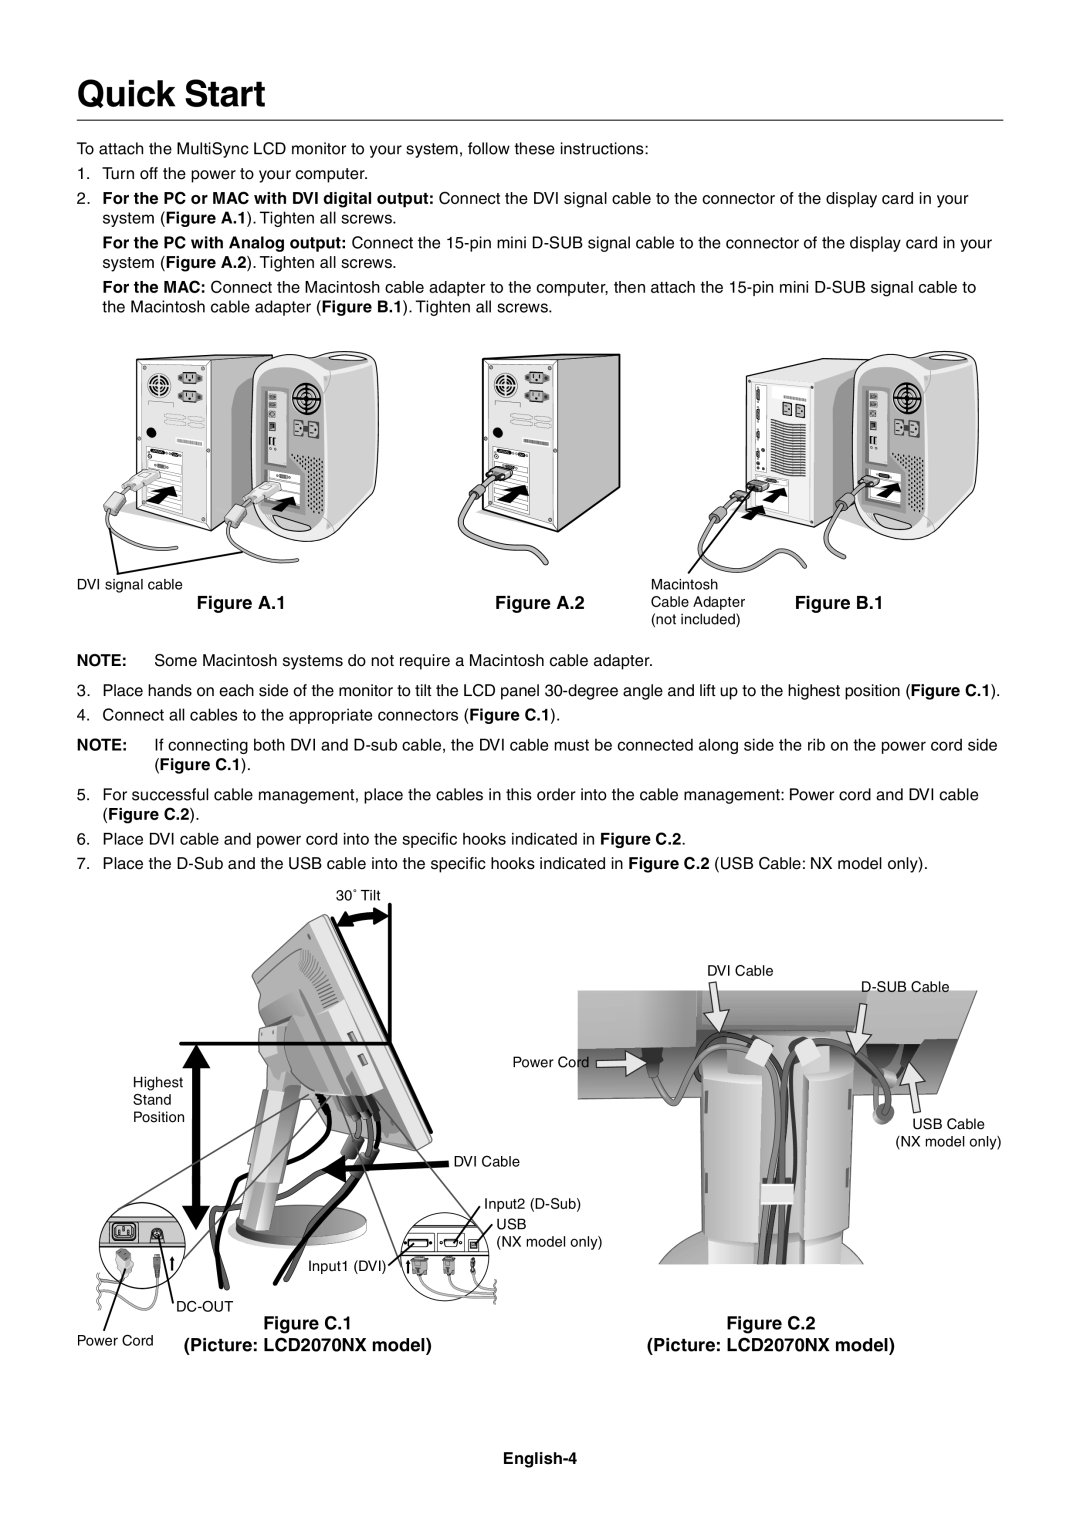 NEC user manual Quick Start, Figure A.1, Figure A.2, Figure C.1, Figure C.2, Power Cord Picture LCD2070NX model 